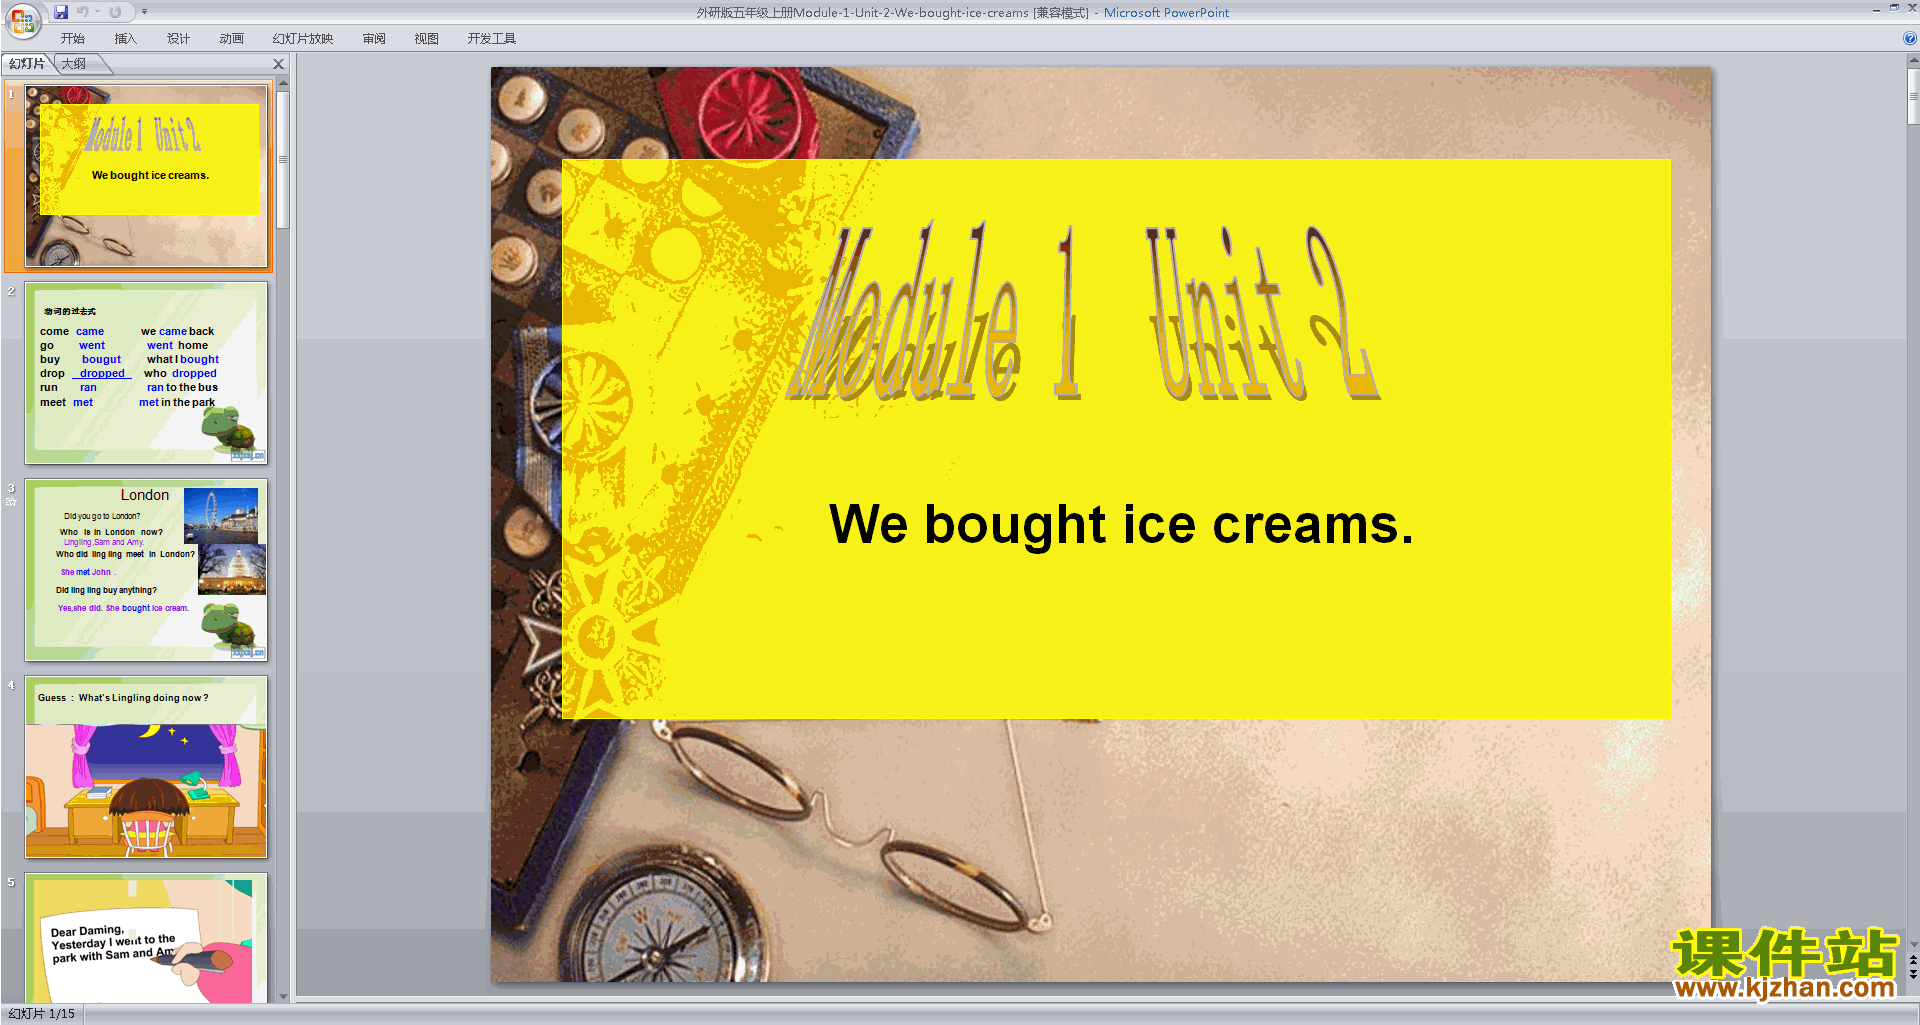 аӢModule1 Unit2 We bought ice creamspptμ11